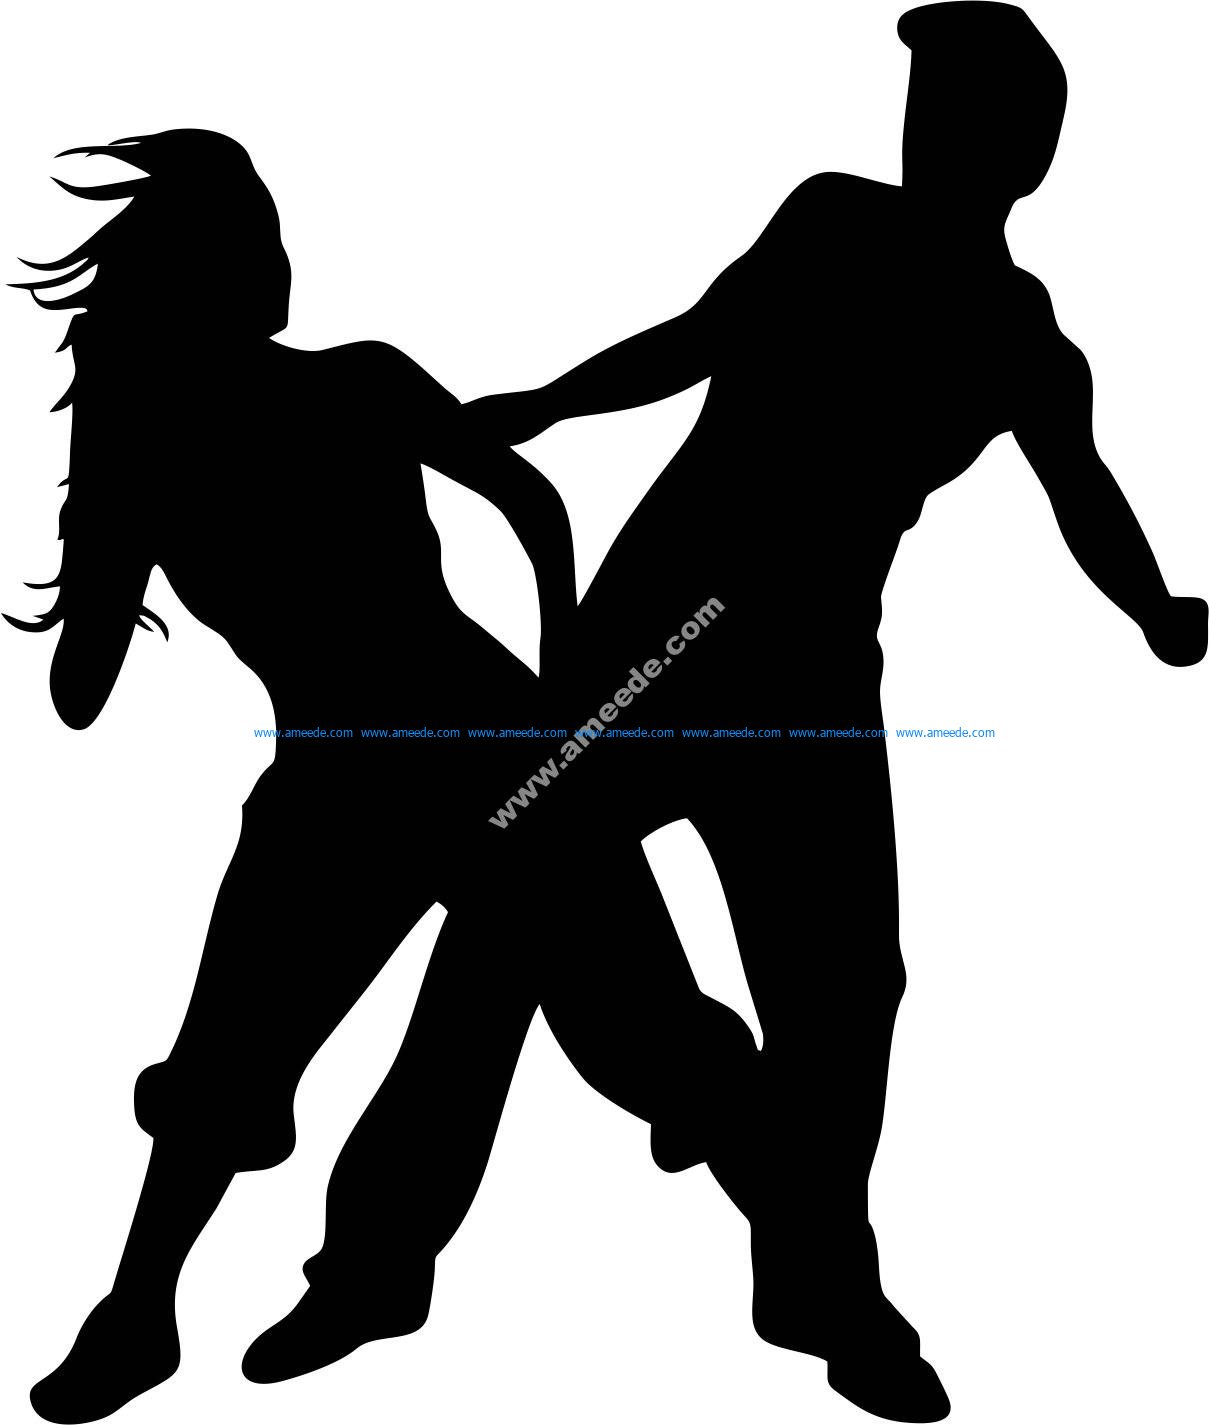 Man and woman dancing vector